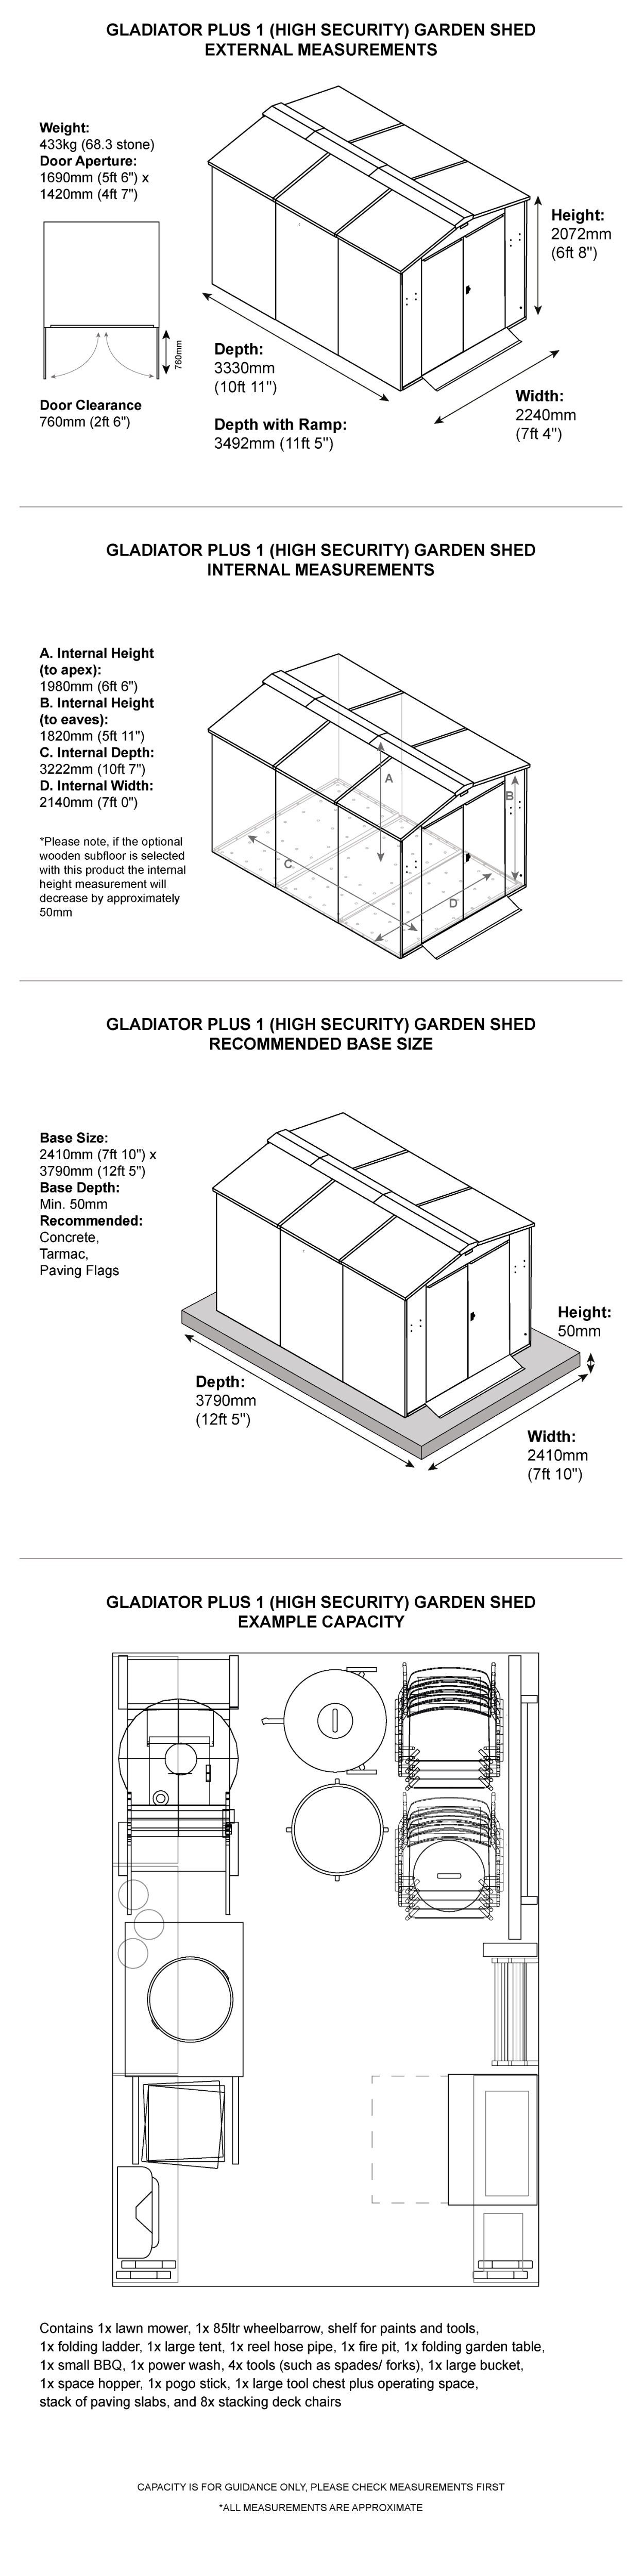 Gladiator 7x11 apex garden storage shed